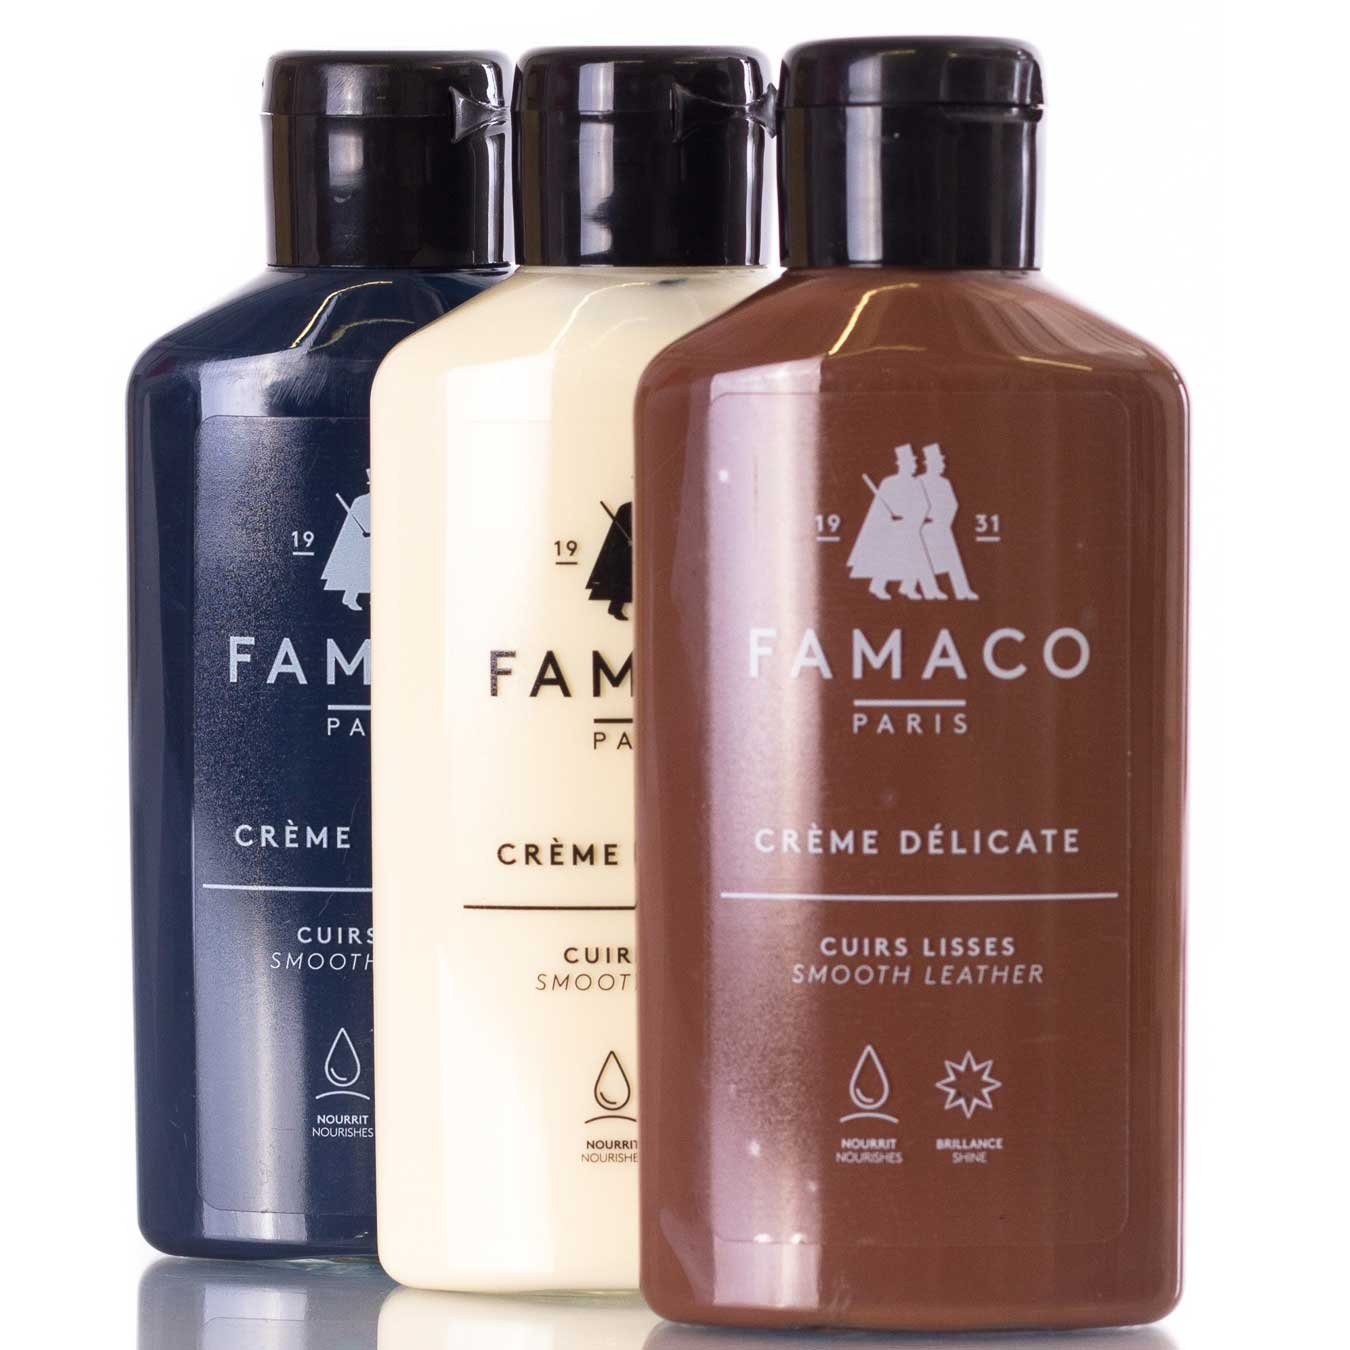 [Zuverlässiger Inlandsversand] Famaco Famaco Creme Farblos Delicate Lederpflege